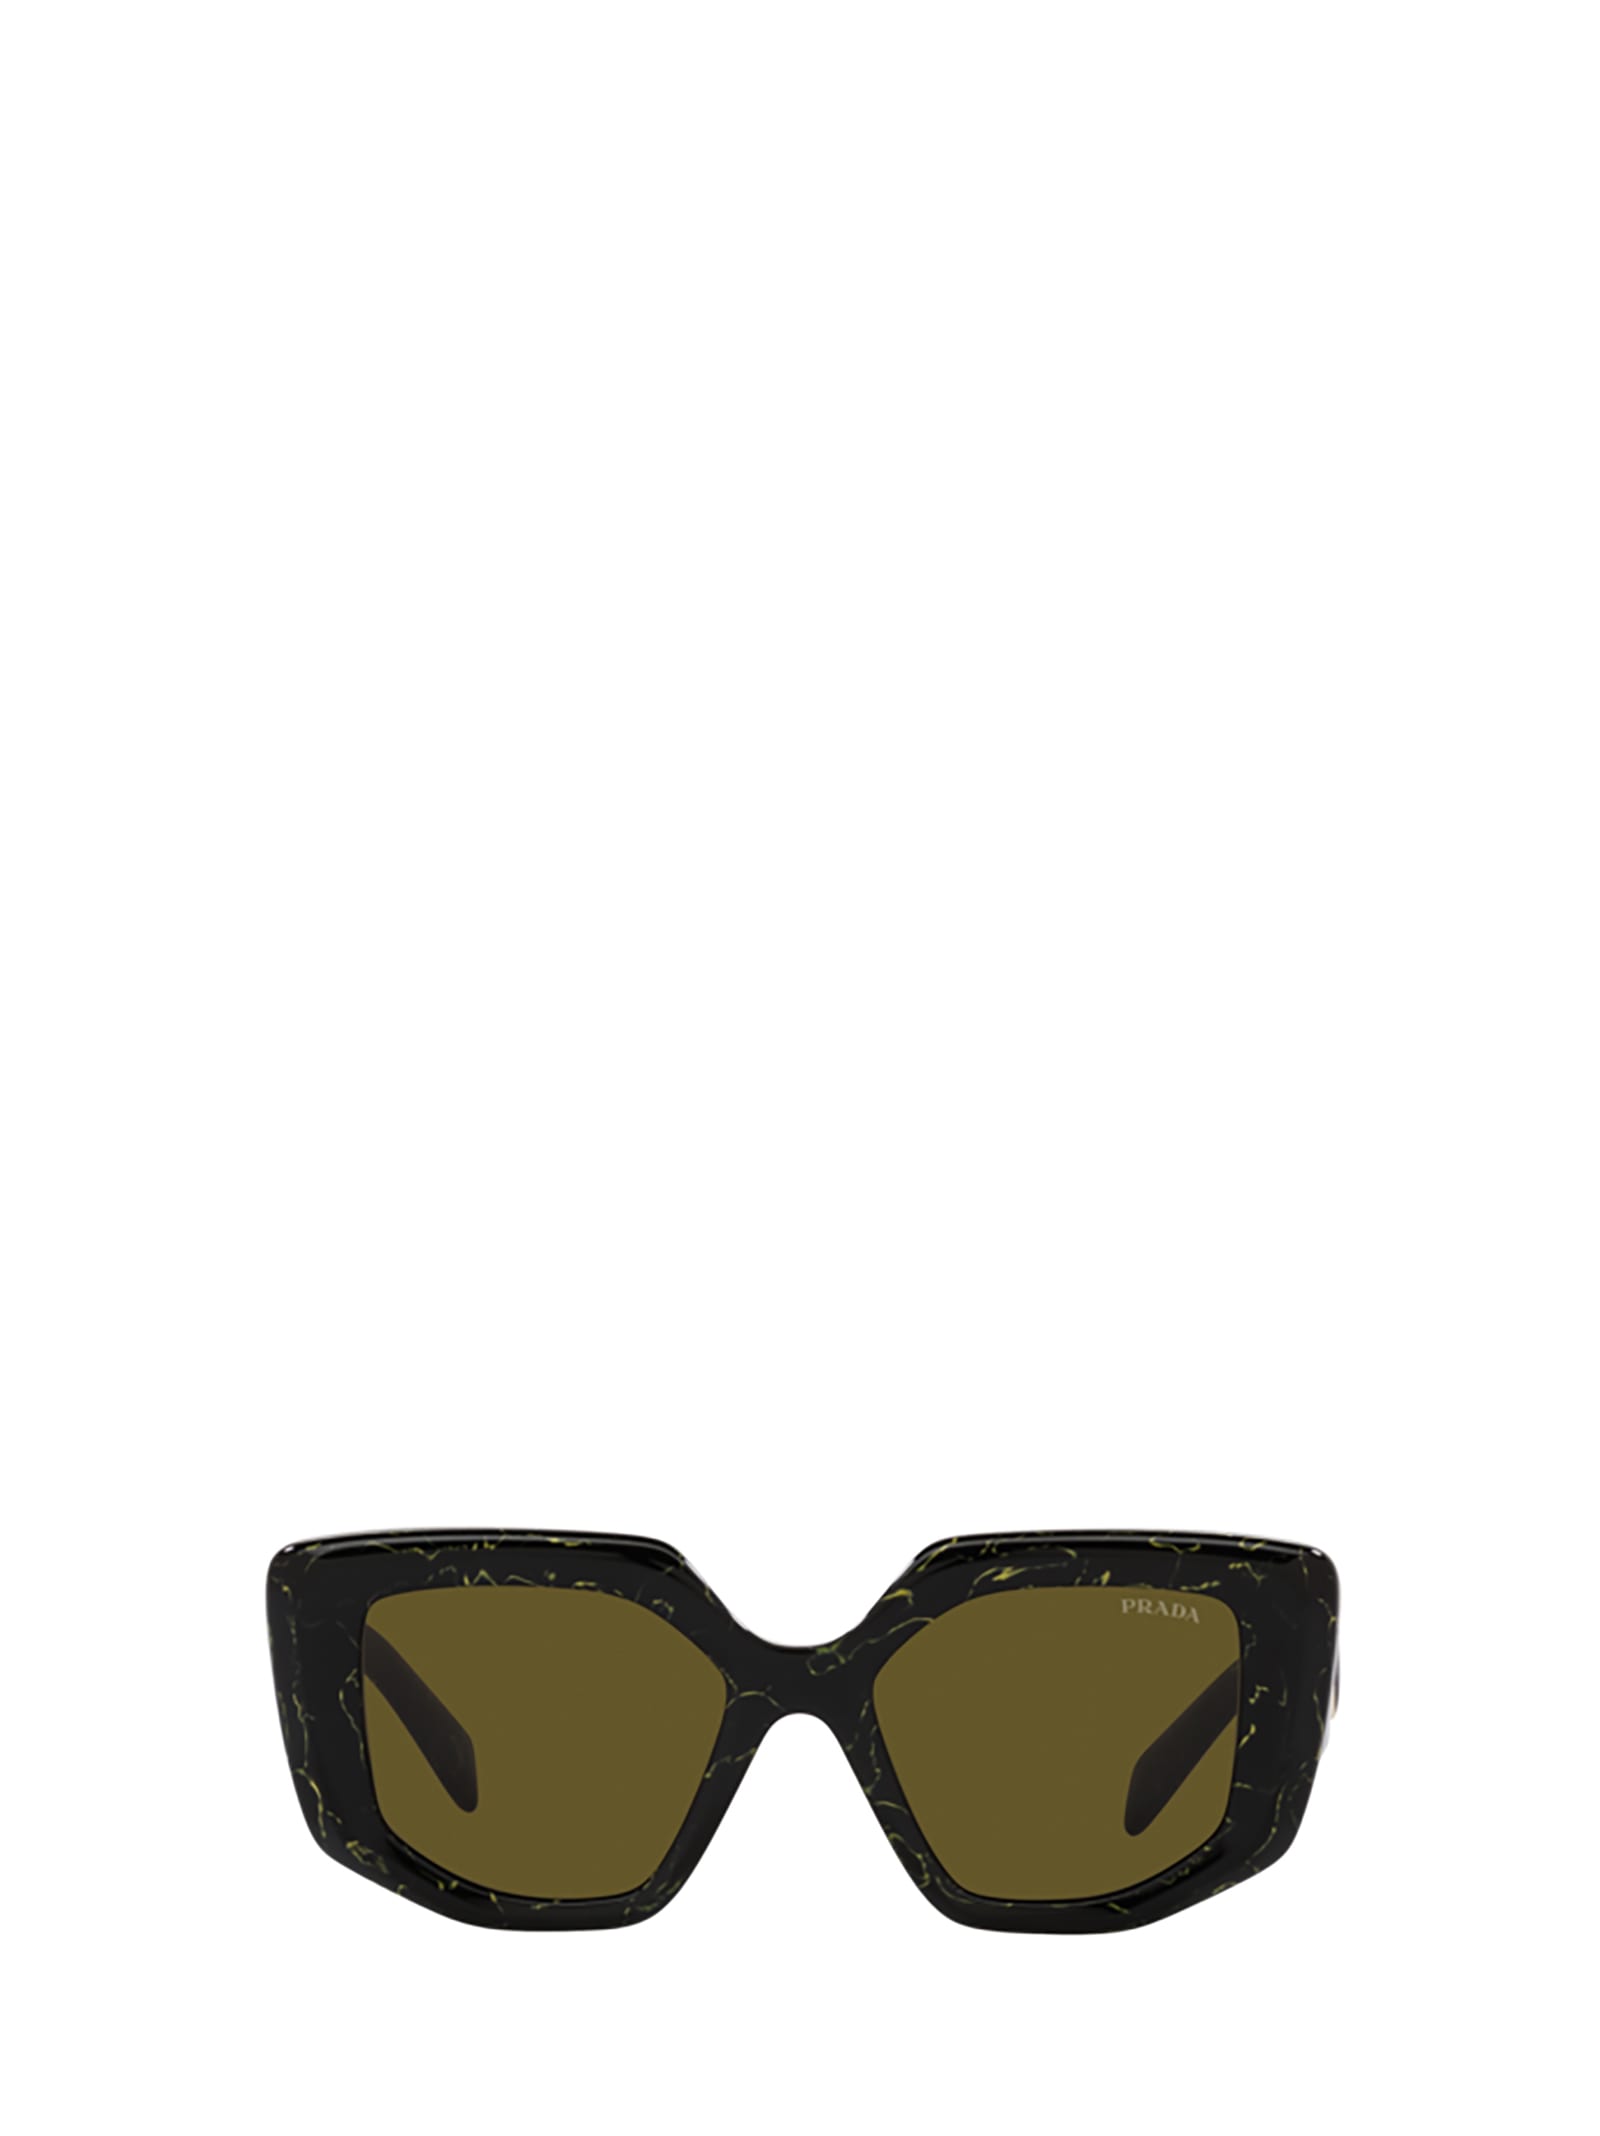 Prada Eyewear Pr 14zs Black / Yellow Marble Sunglasses